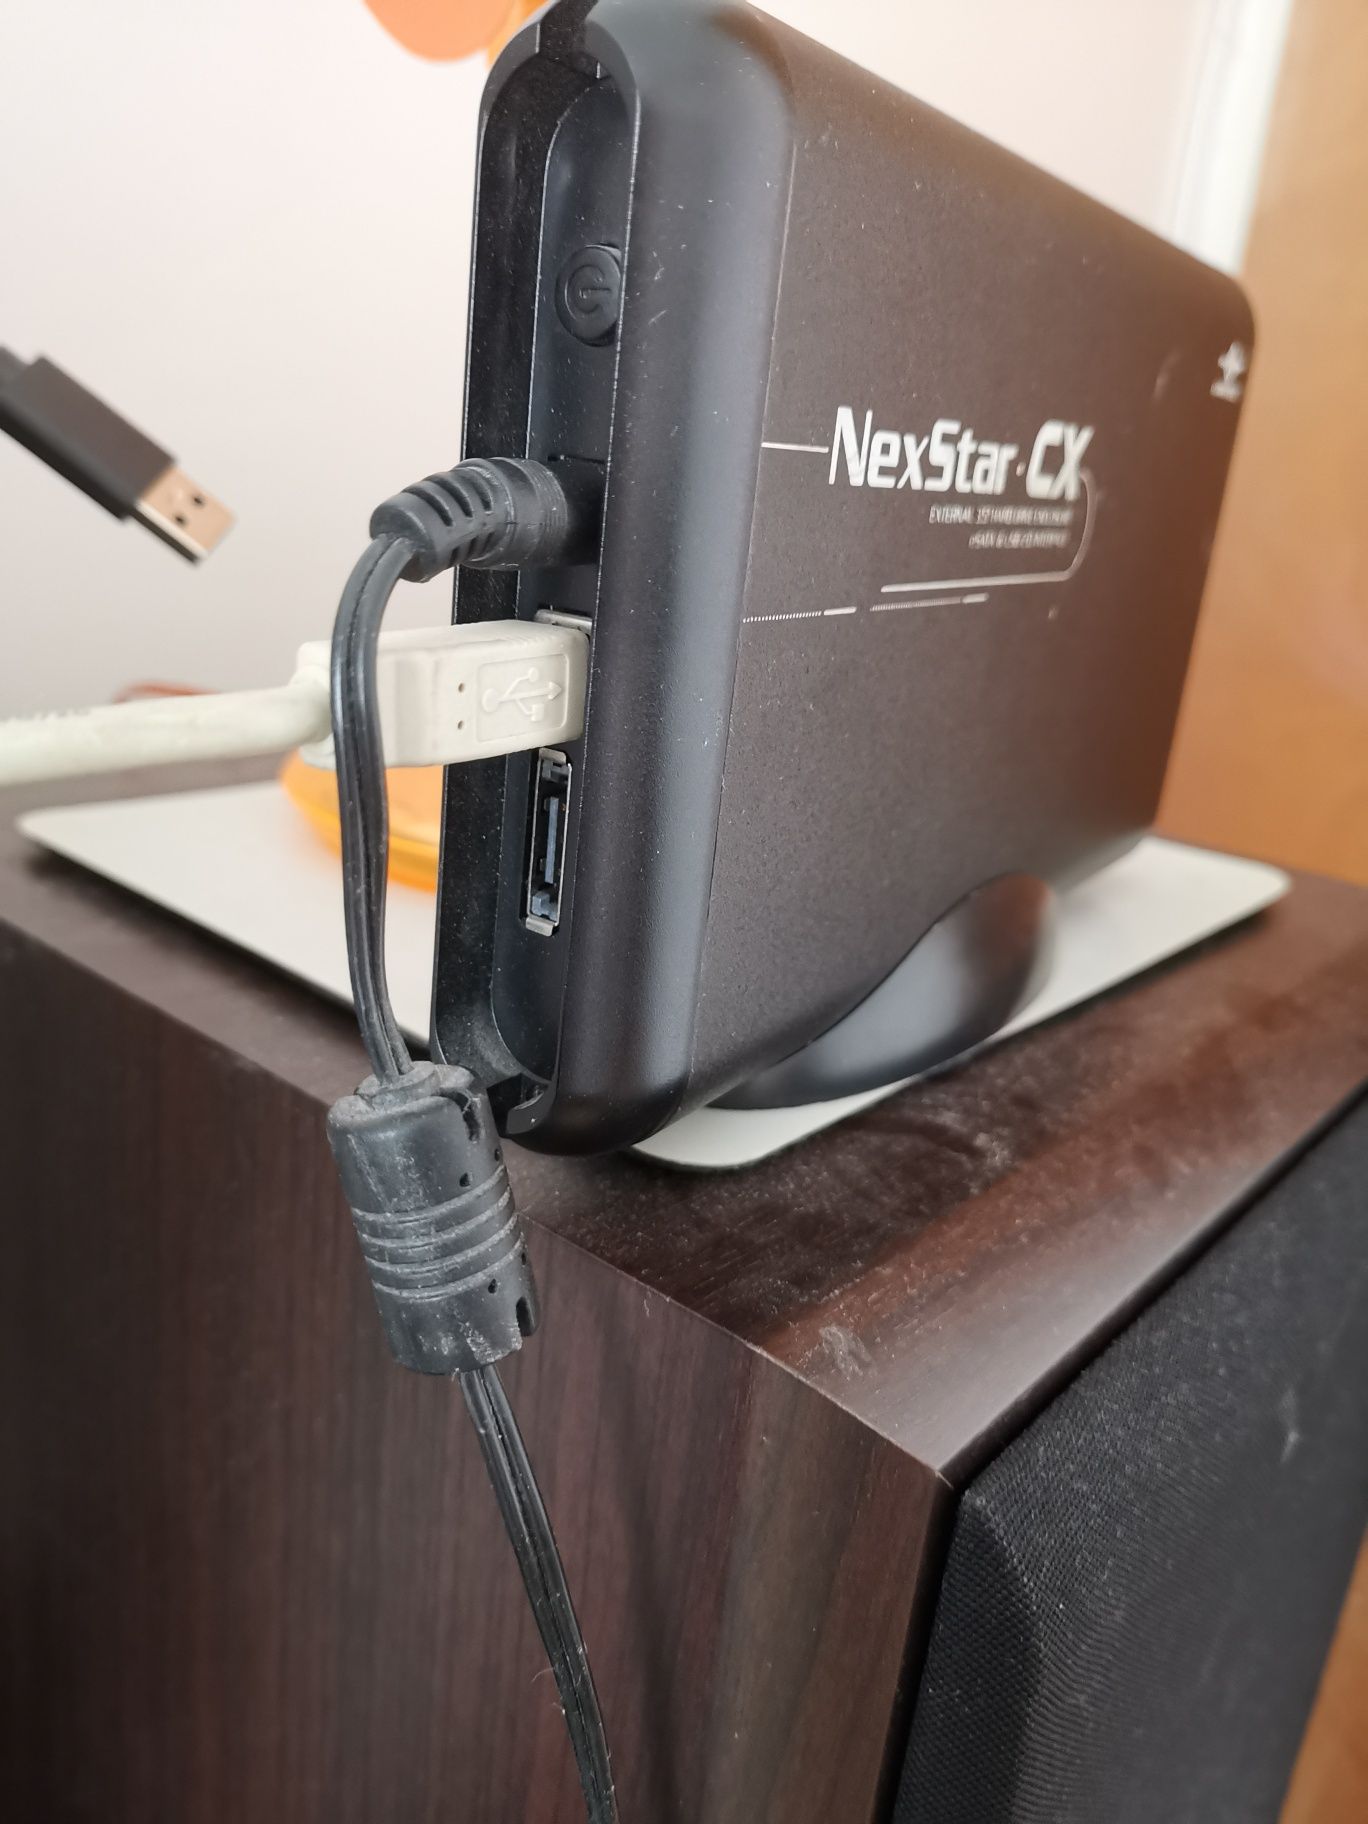 Harddisk extern NexStar CX 1TB, cu alimentator si cablu usb